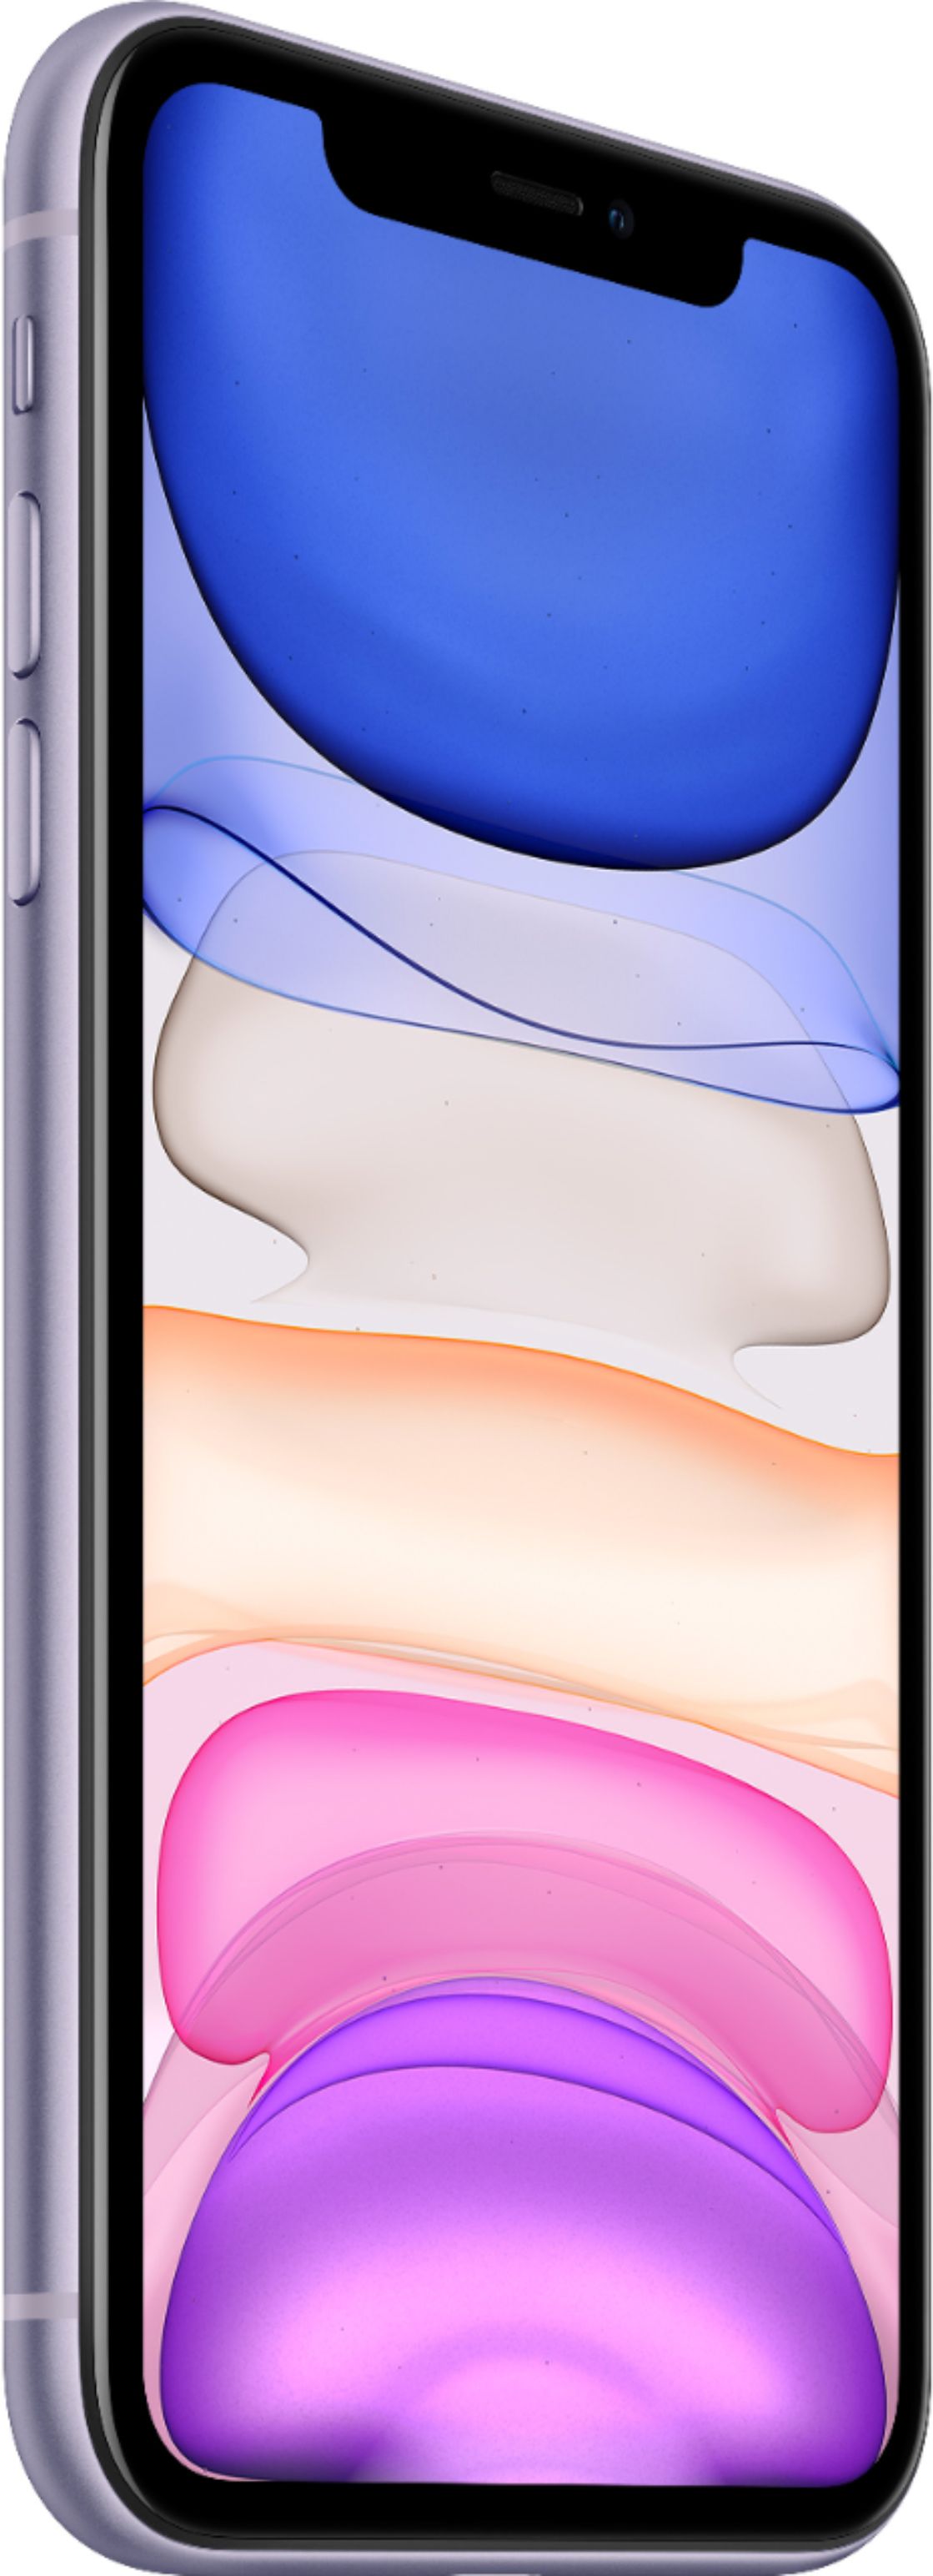 Best Buy: Apple iPhone 11 256GB Purple (Verizon) MWLQ2LL/A